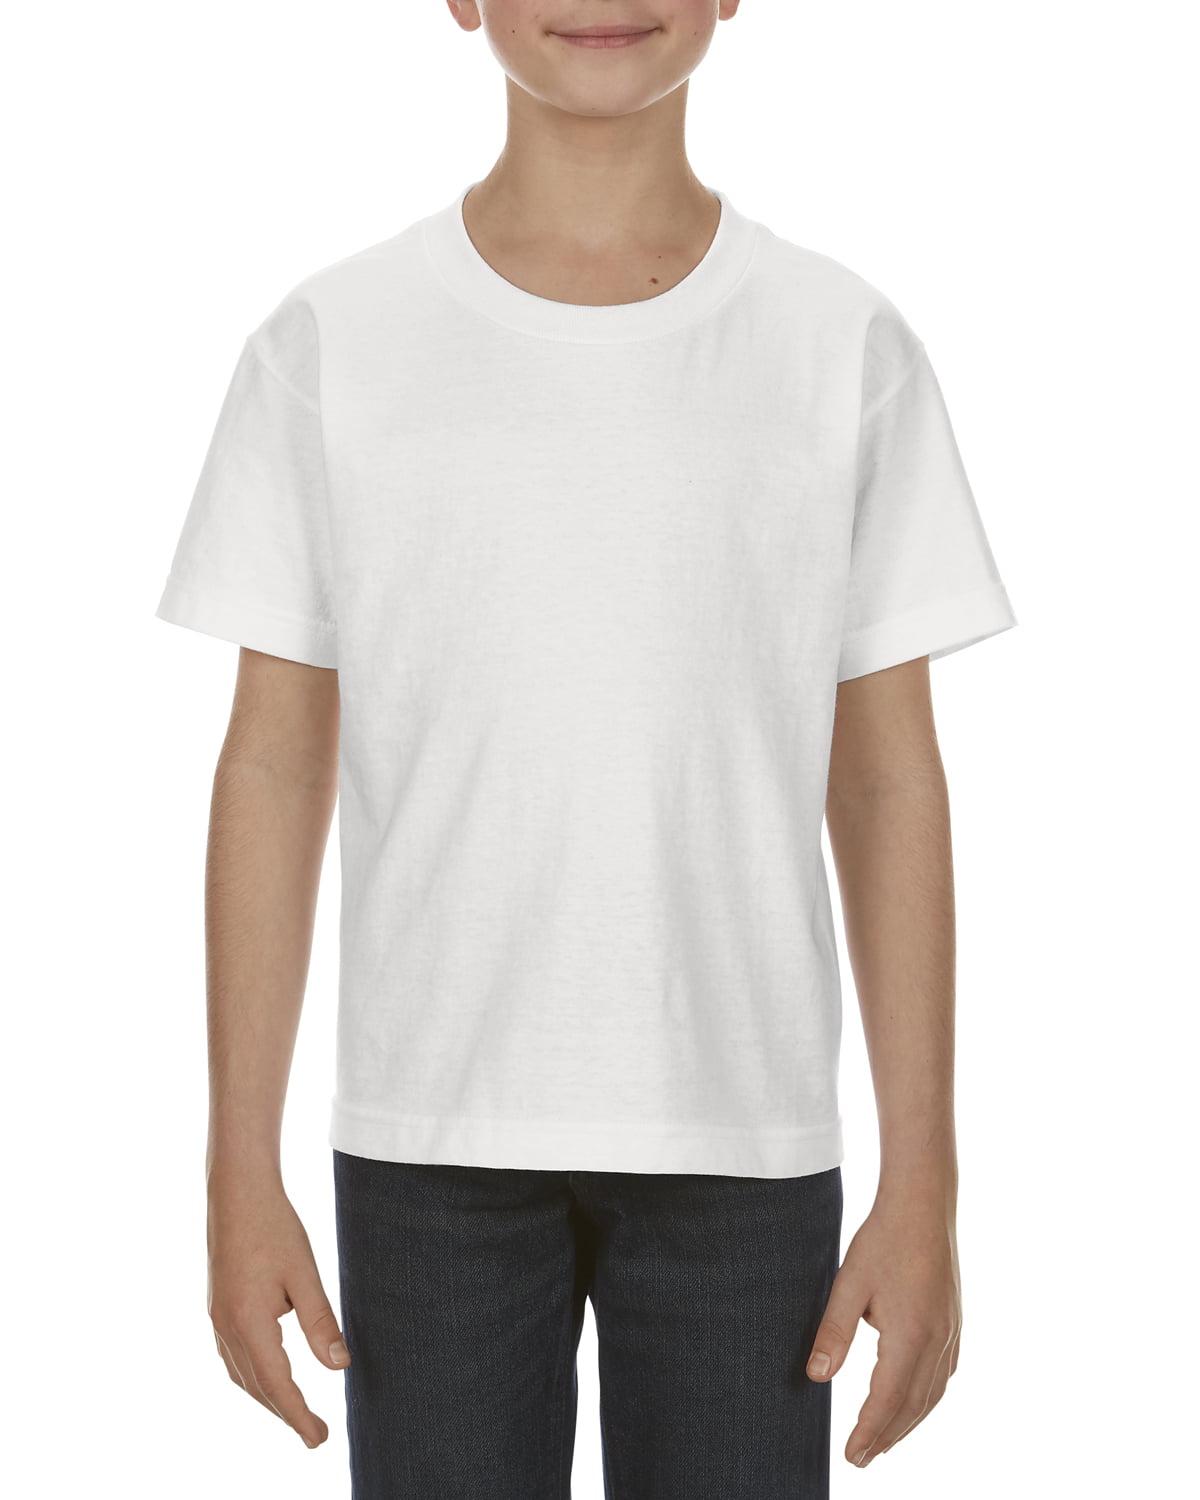 Alstyle - Alstyle AL3381 Youth 6.0 oz., 100% Cotton T-Shirt - White - X ...